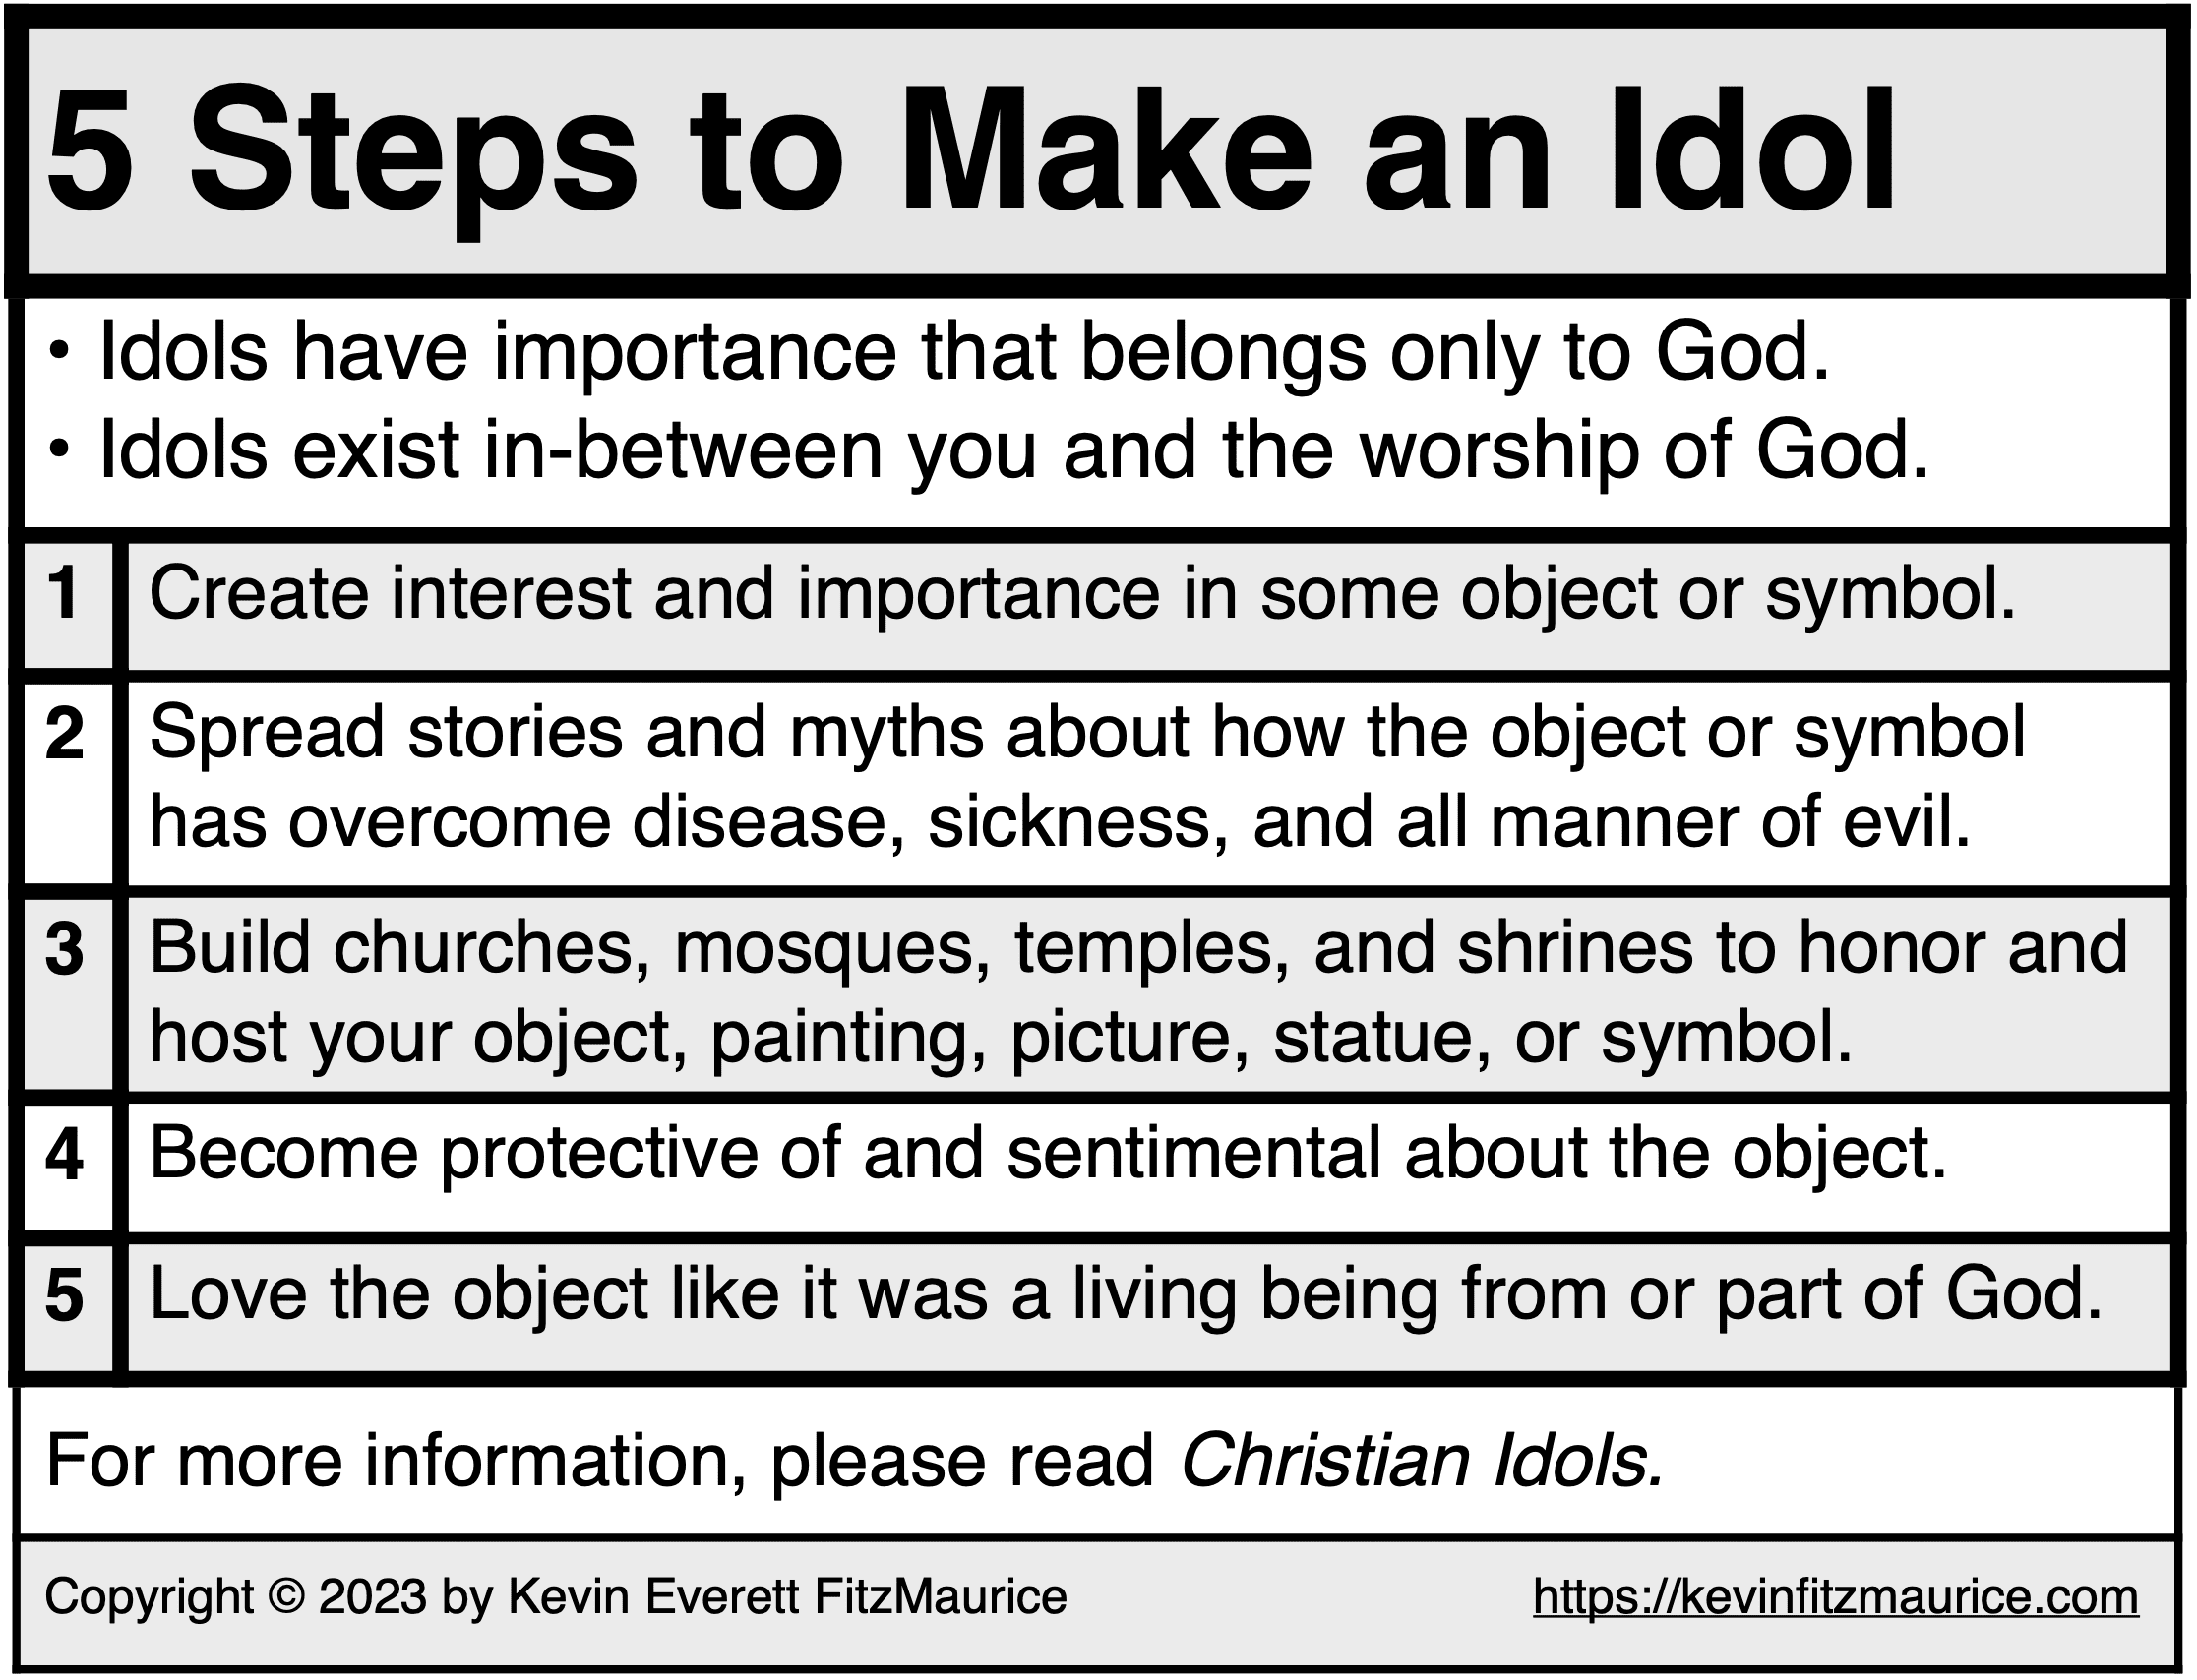 Fast-Facts Christian Idols 5 Steps to Make an Idol